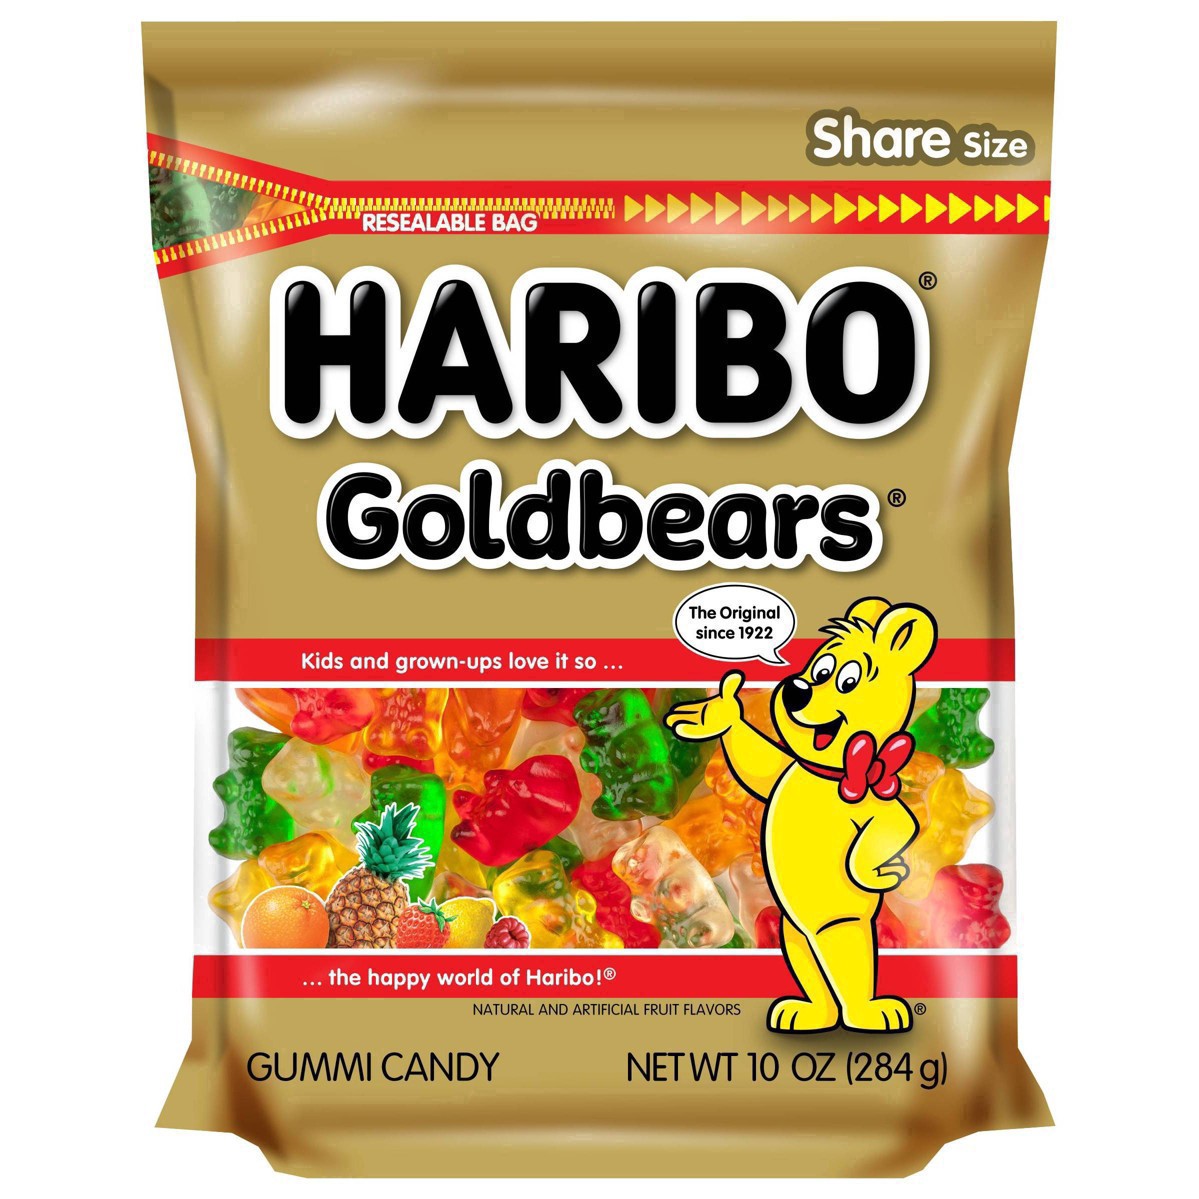 slide 17 of 22, Haribo Share Size Goldbears Gummi Candy 10 oz, 10 oz